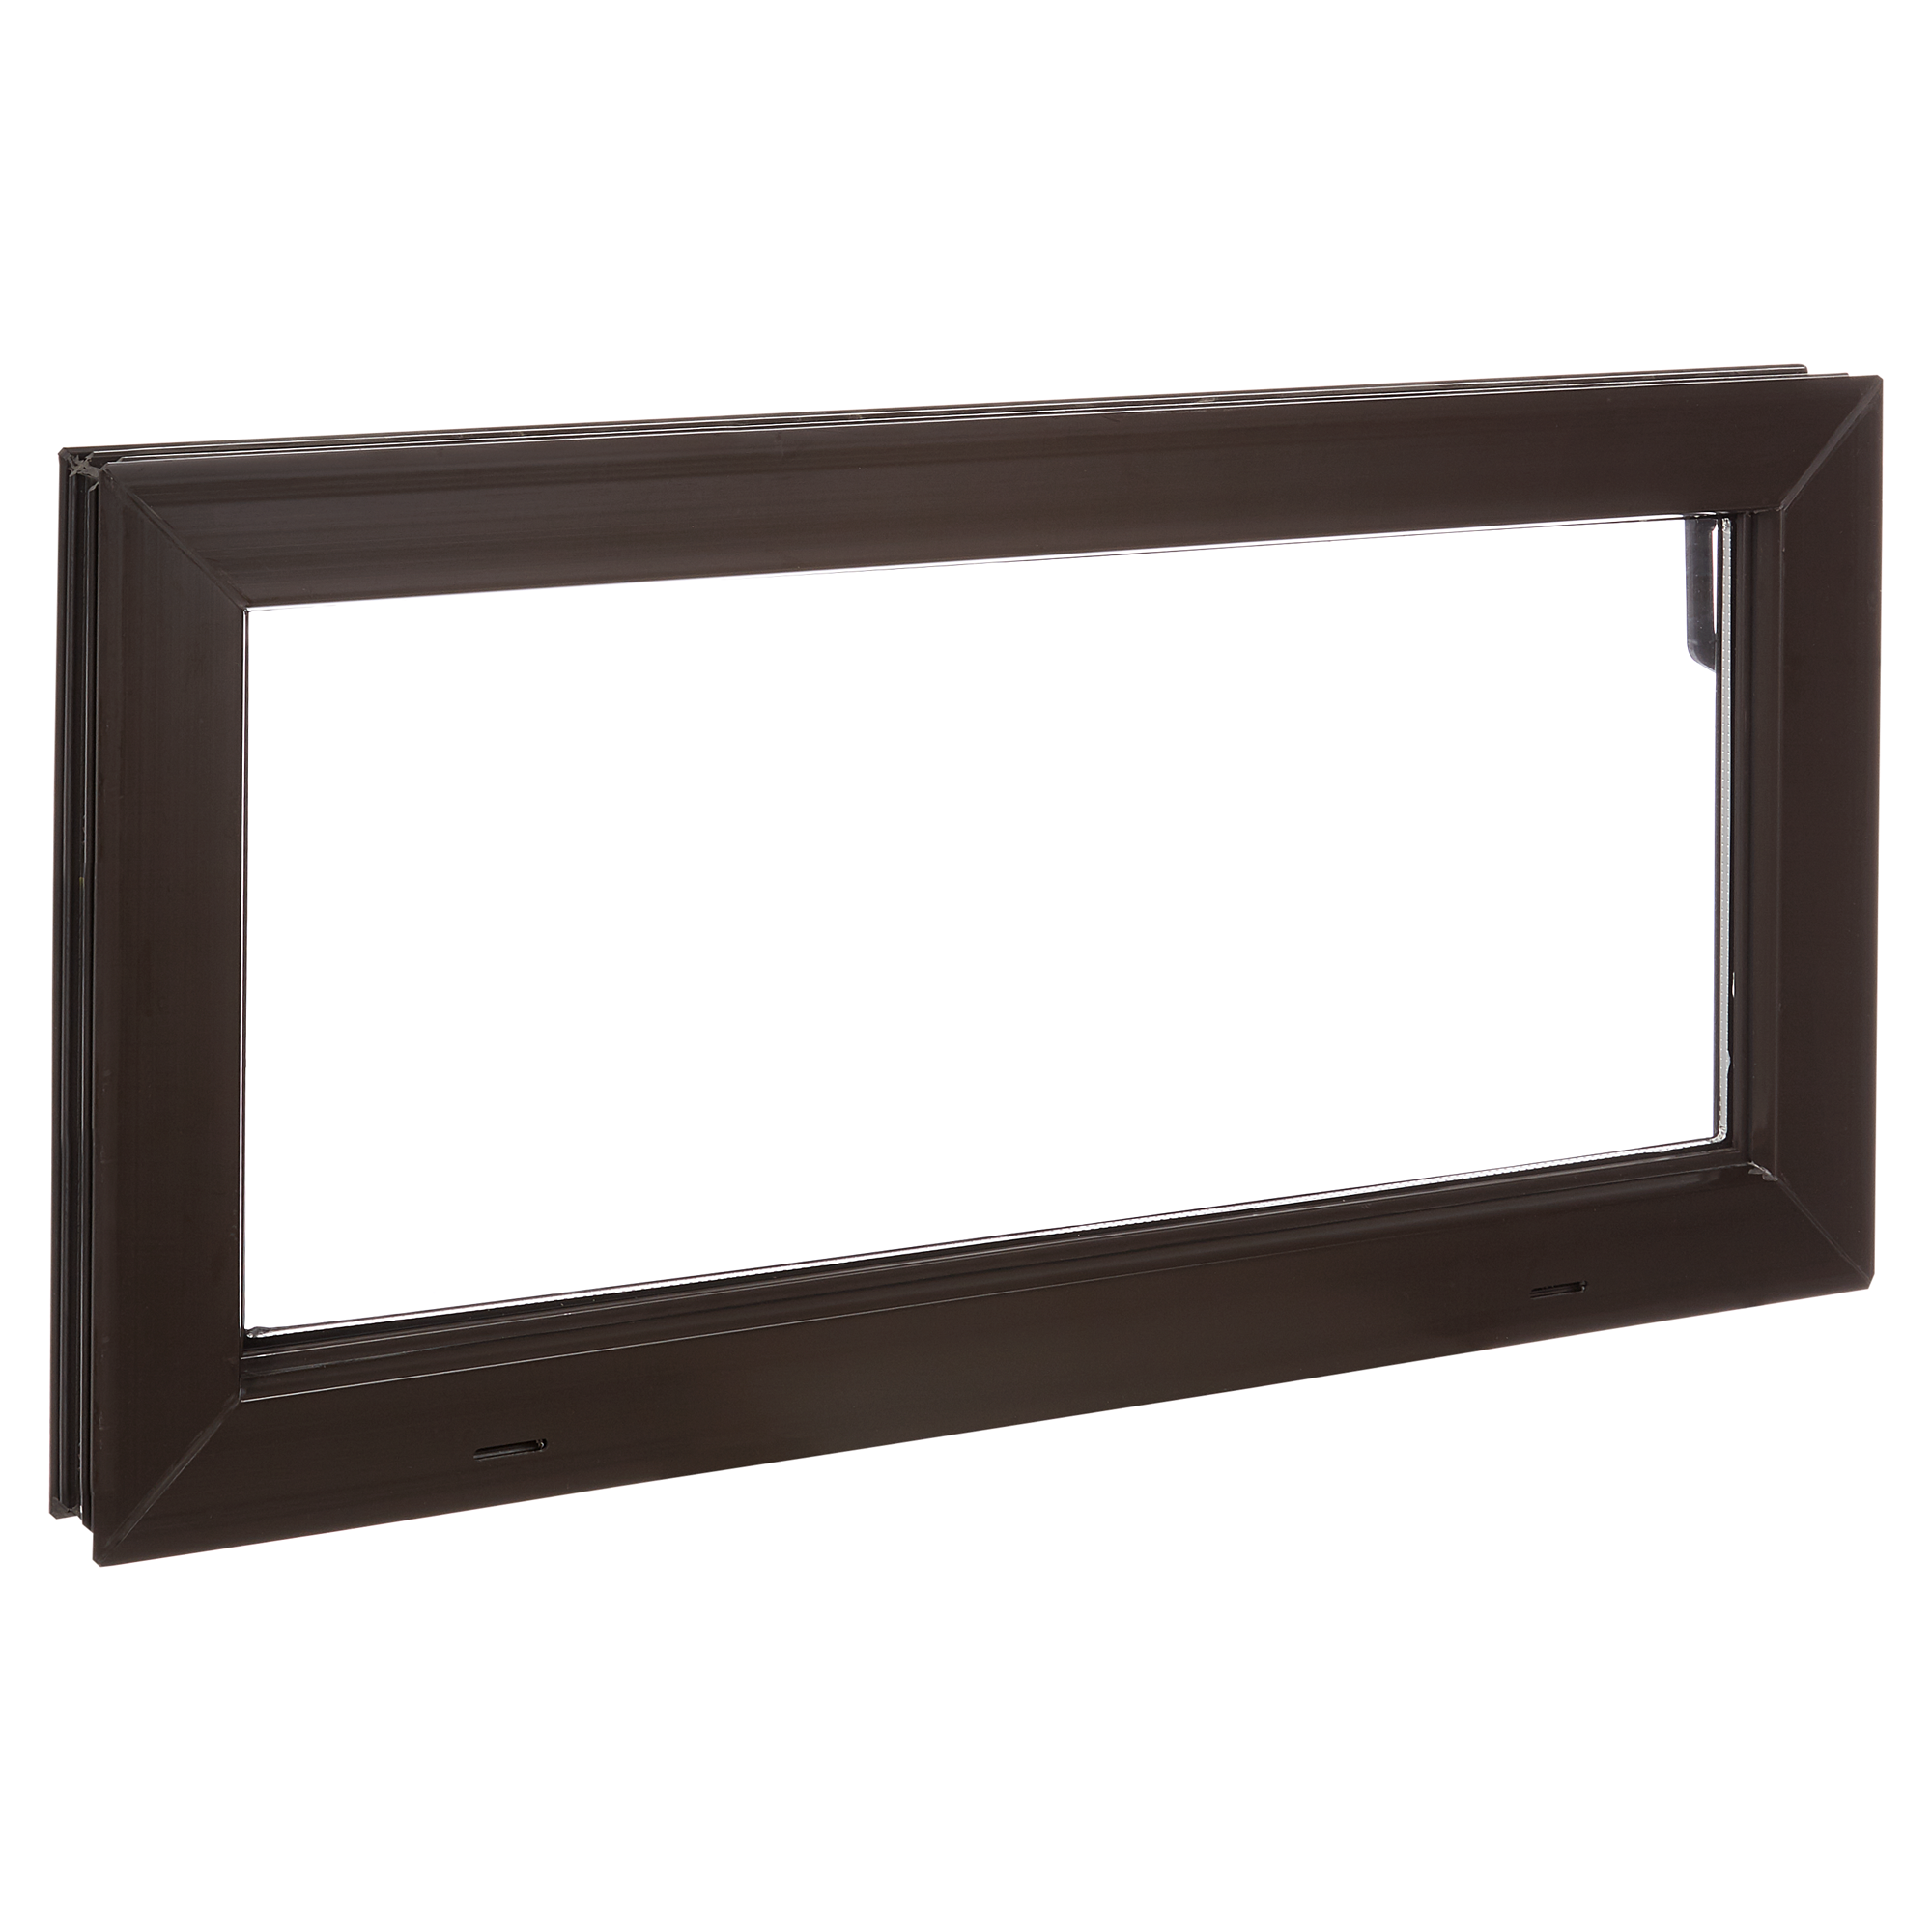 Kippfenster dunkelbraun 1-flügelig 80 x 40 cm + product picture